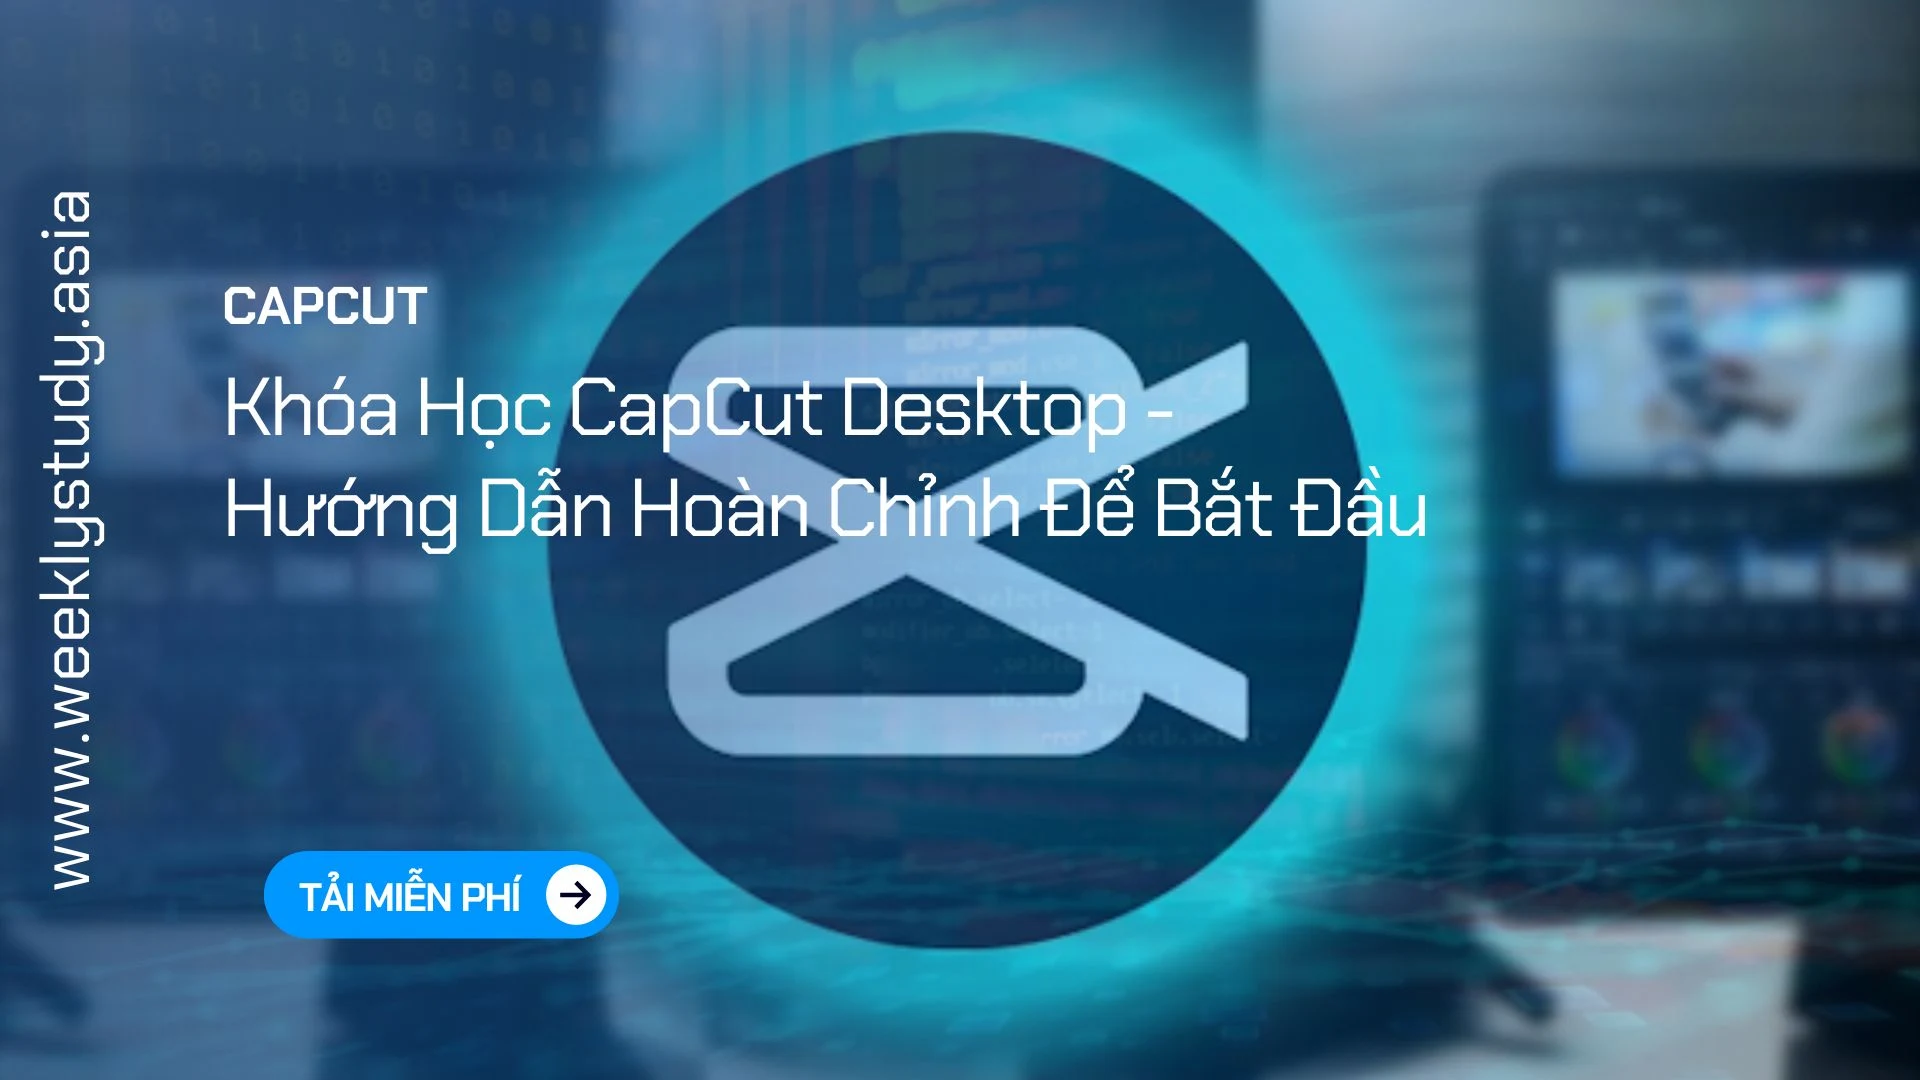 weekly-study-khoa-hoc-capcut-desktop-huong-dan-hoan-chinh-de-bat-dau-ma-6845a